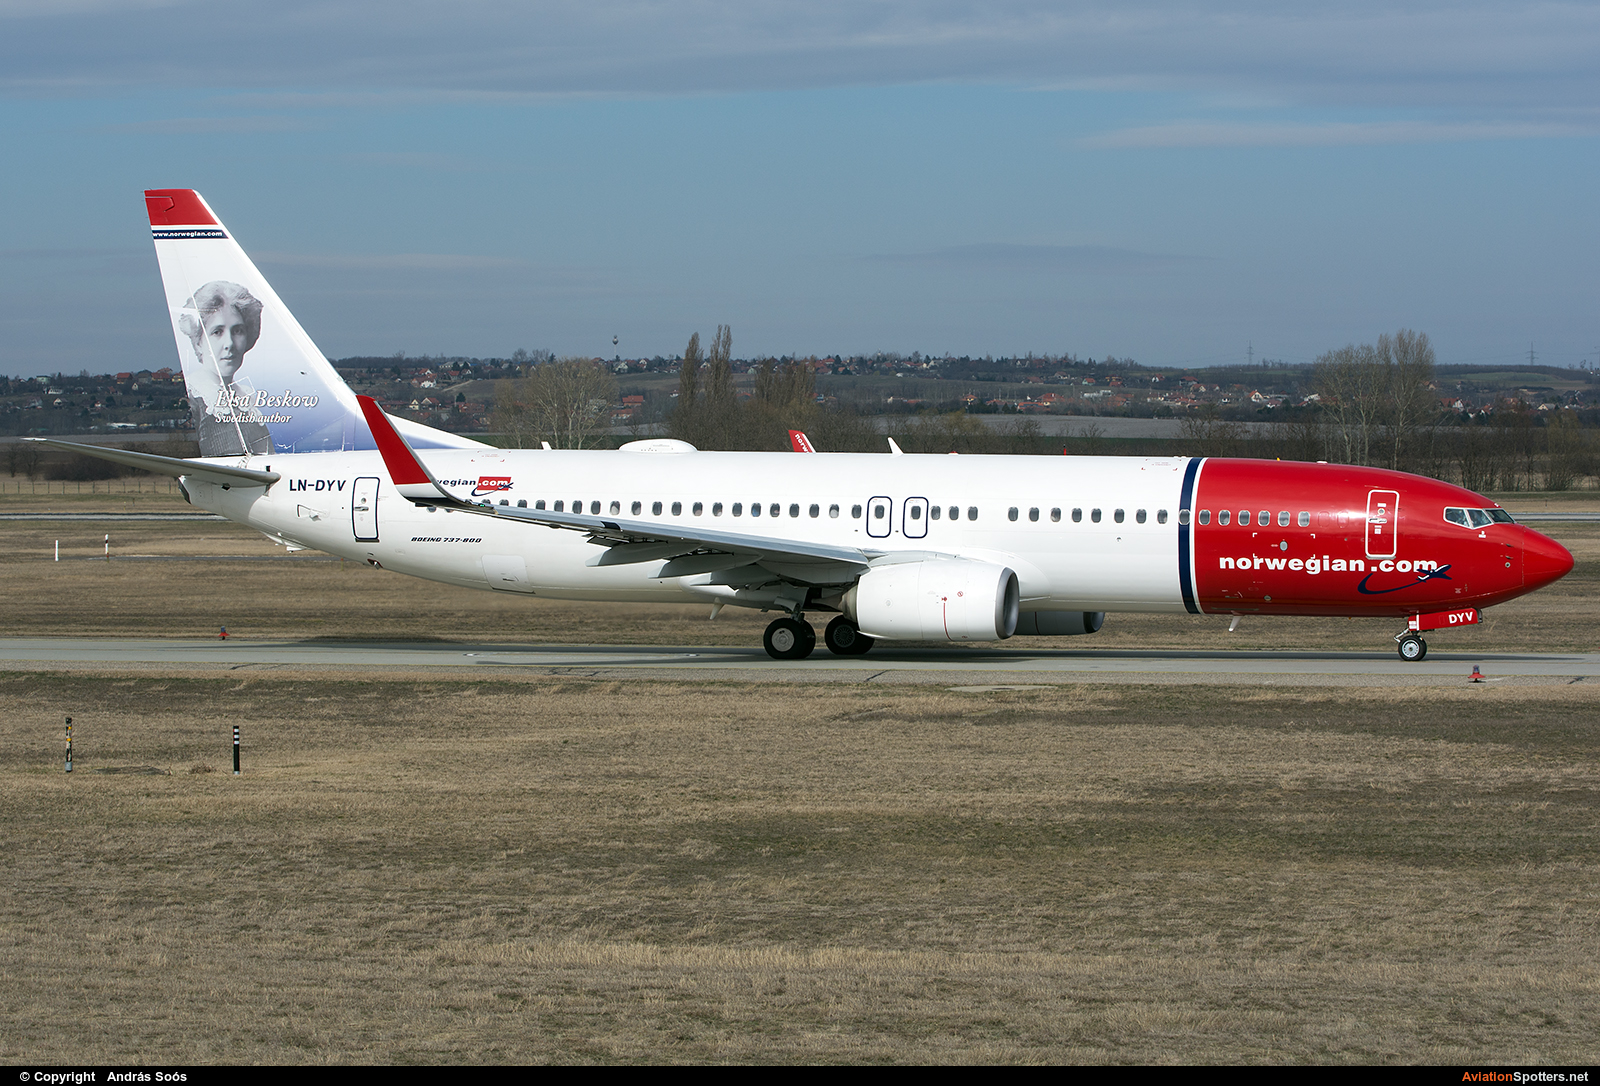 Norwegian Air Shuttle  -  737-800  (LN-DYV) By András Soós (sas1965)